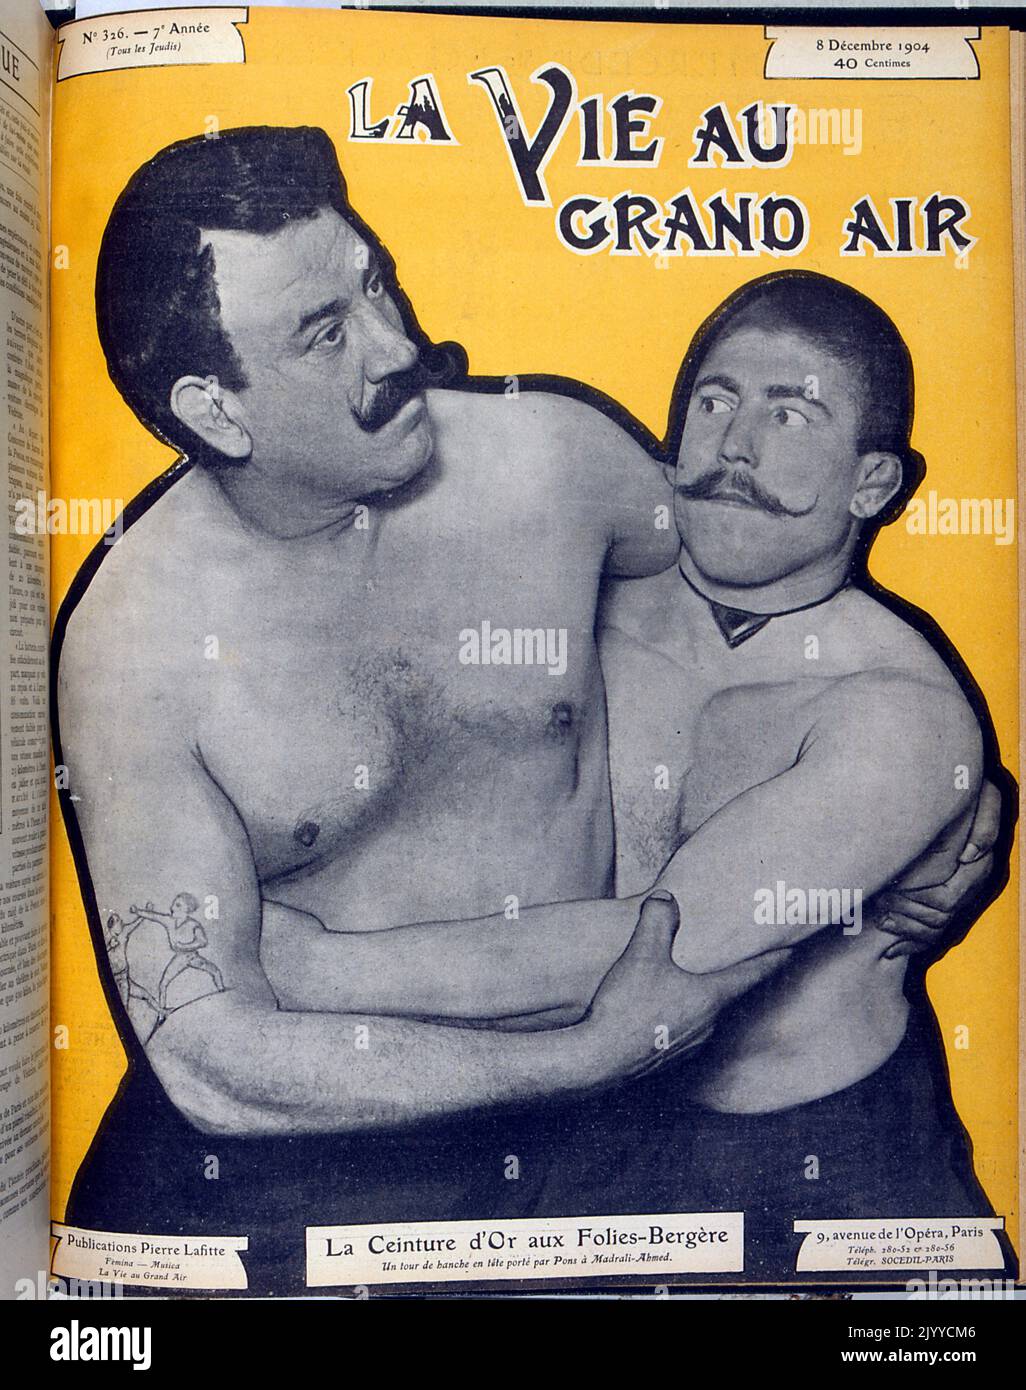 Photograph inside of the lifestyle magazine La Vie au Grand Air; two men wrestling. Stock Photo